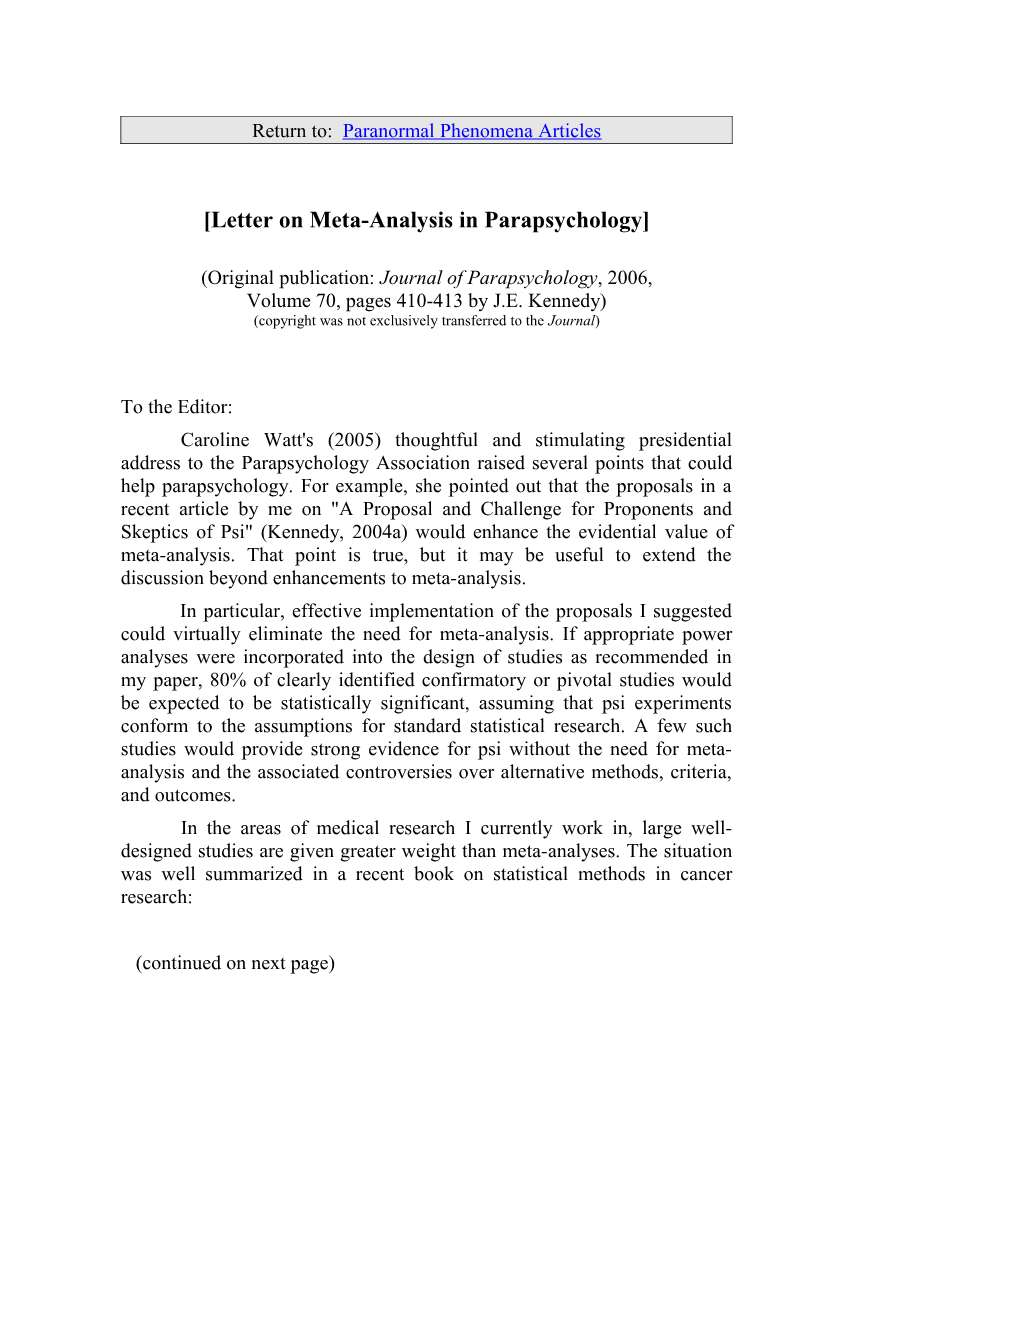 Letter on Meta-Analysis in Parapsychology